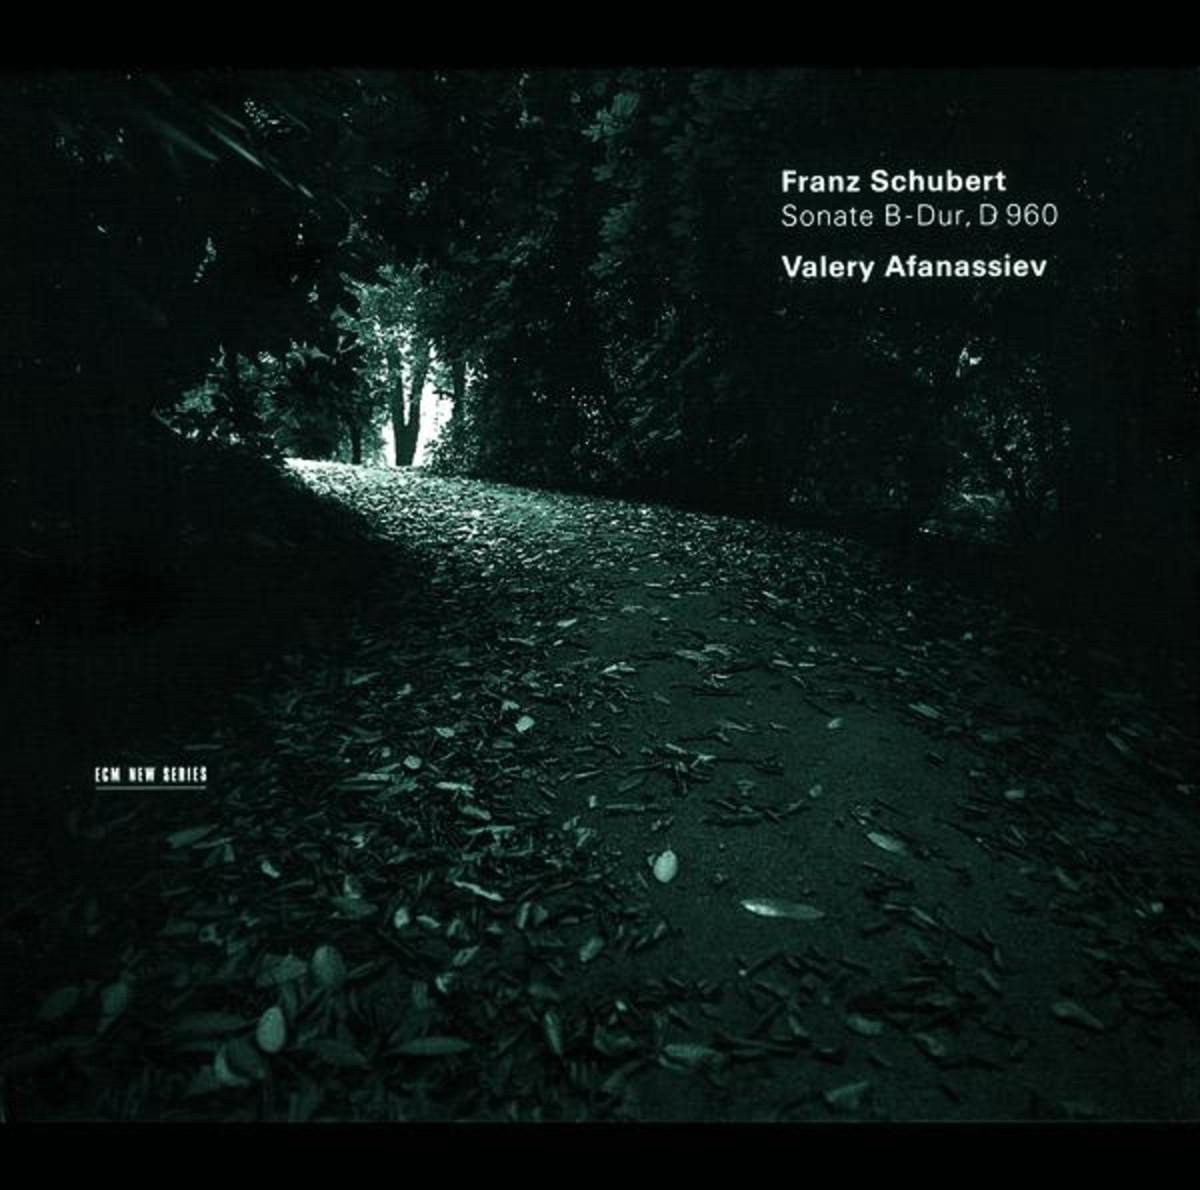 Sonate B-Dur. D 960 | Valery Afanassiev, Franz Schubert